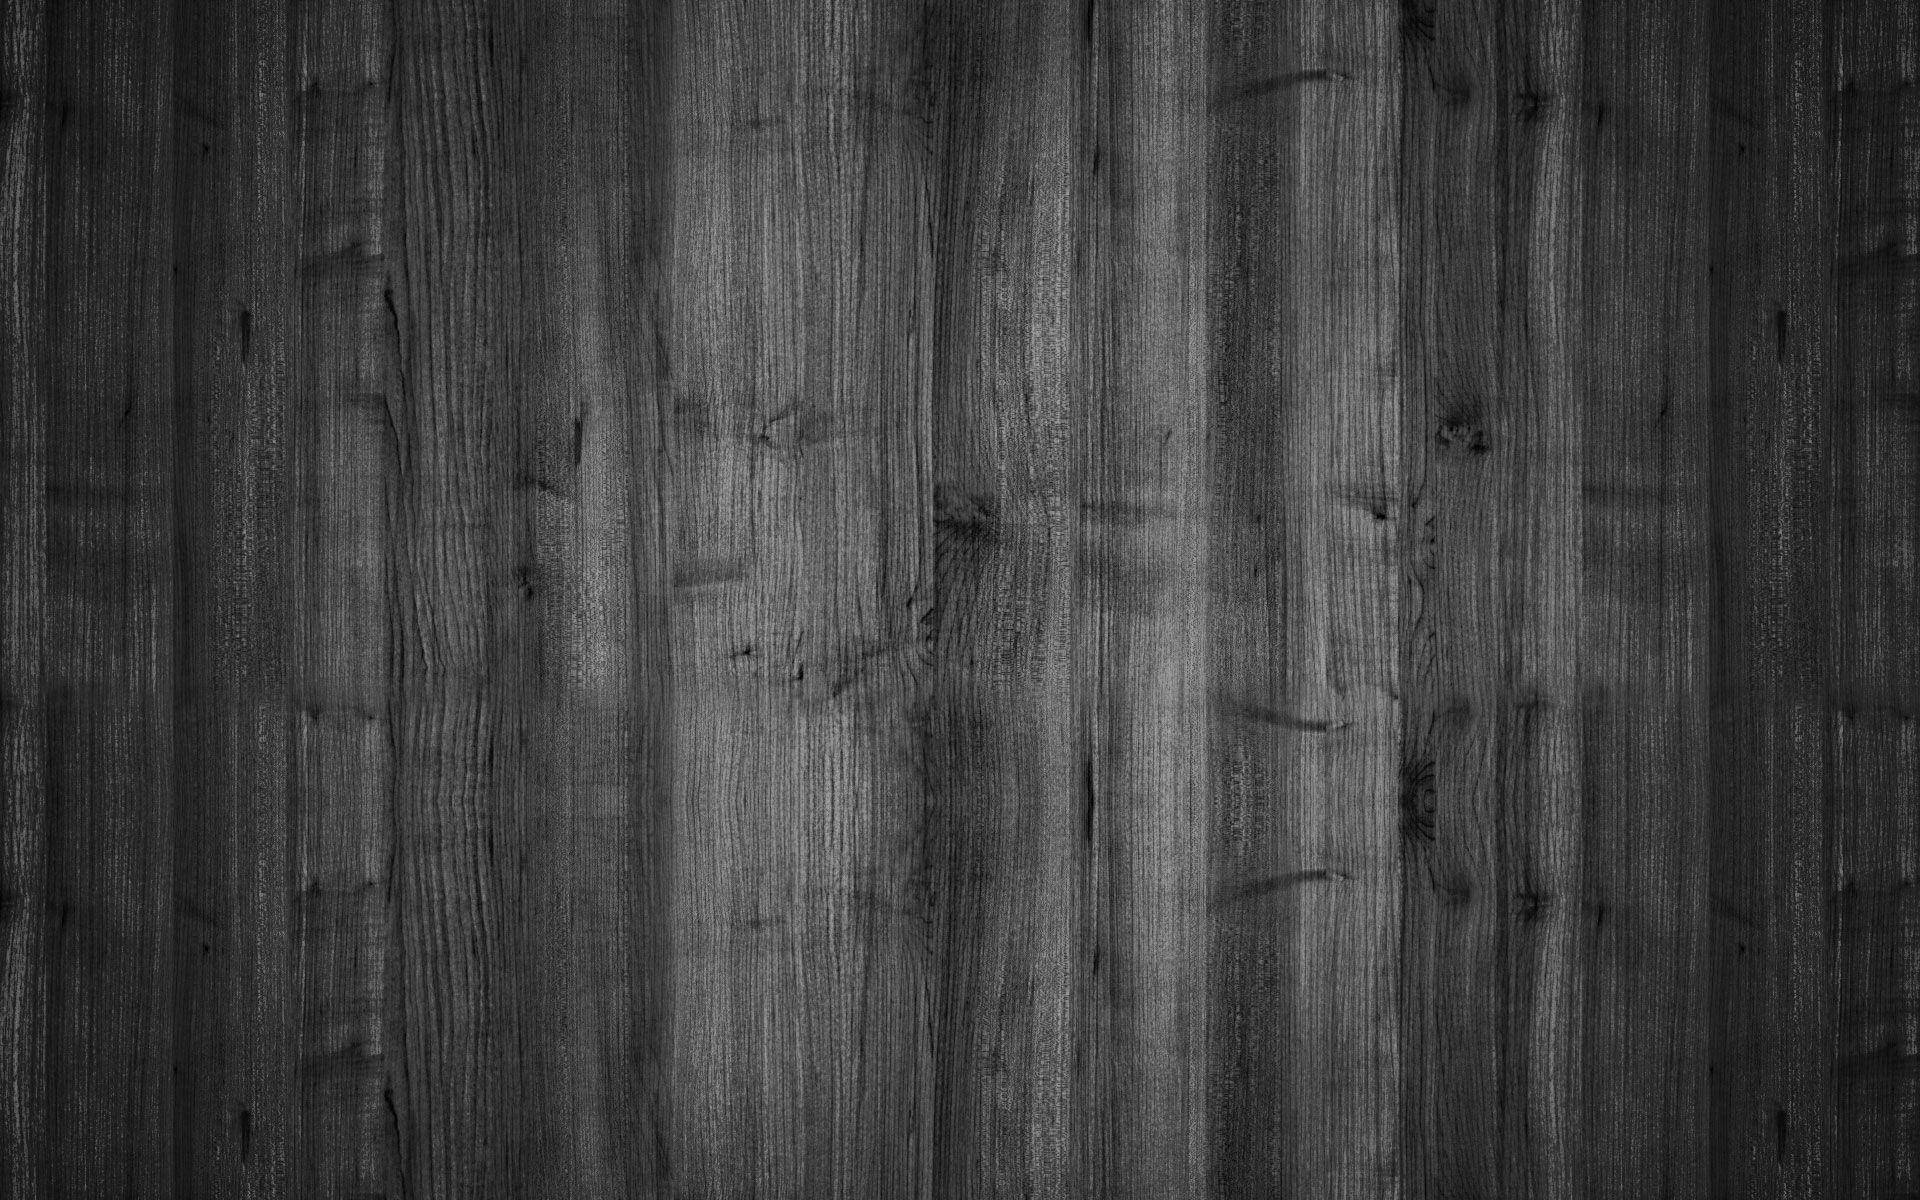 Wood grain background free hd.